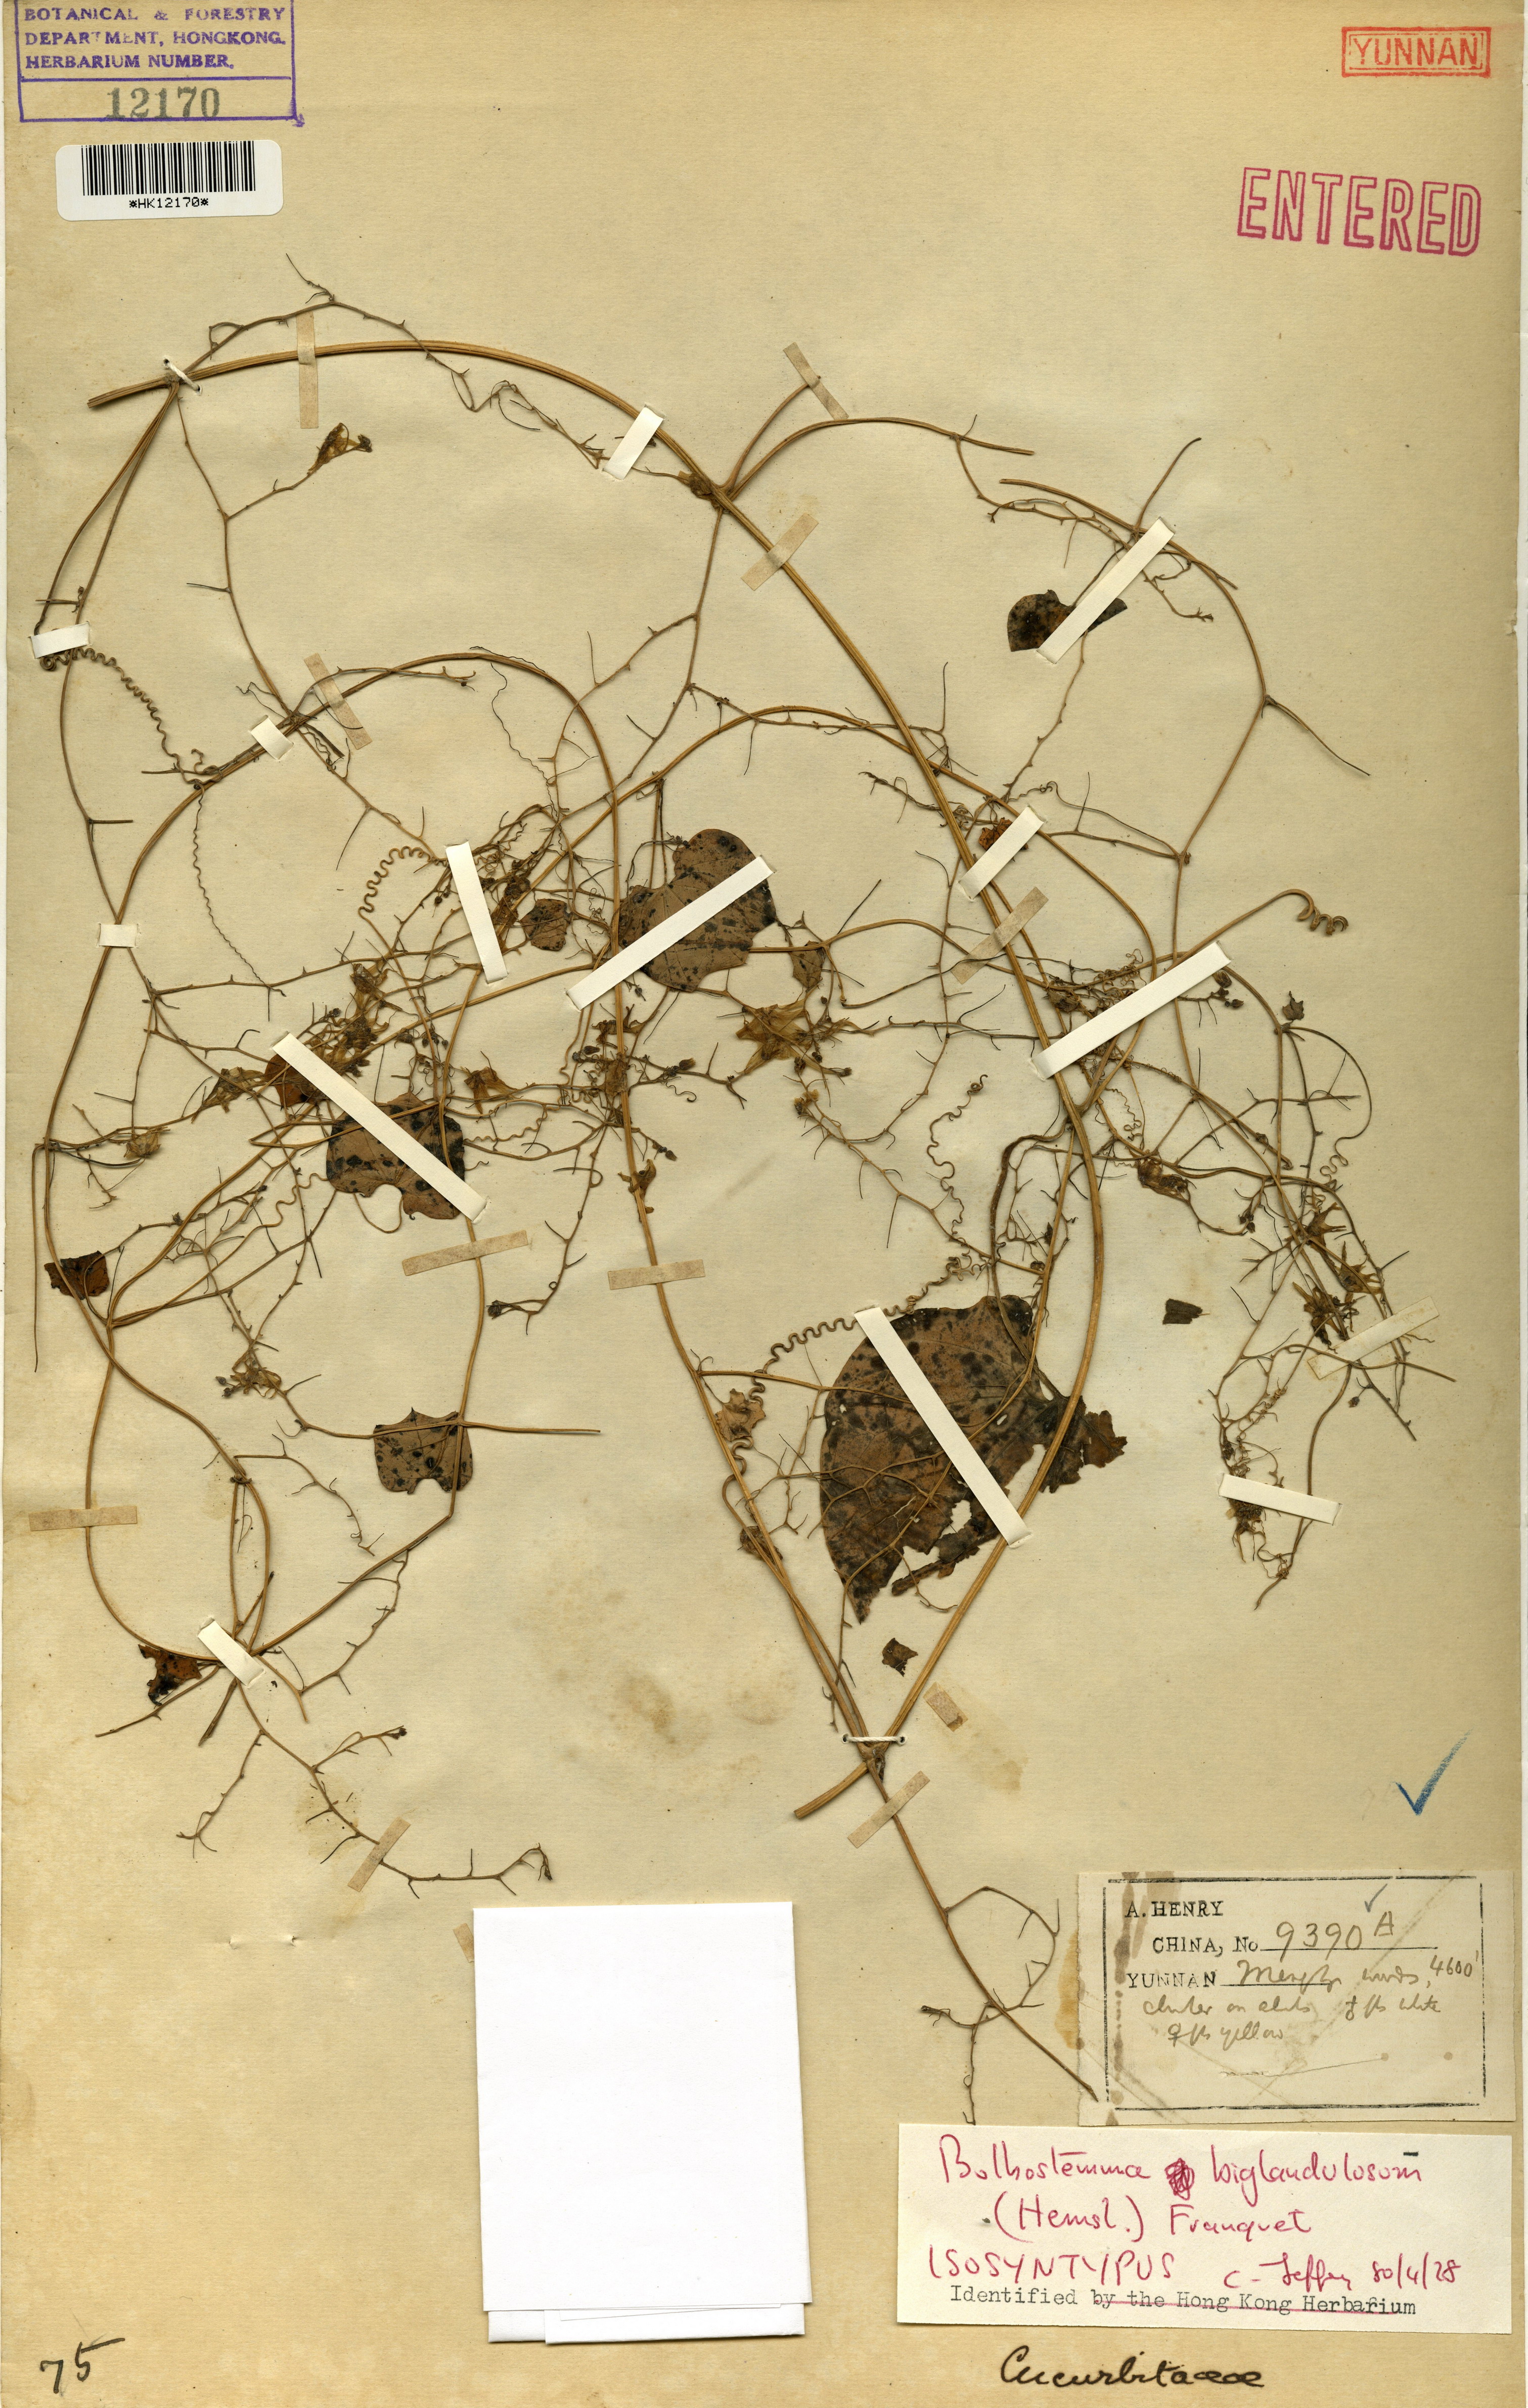  Bolbostemma biglandulosum (Hemsl.) Franquet